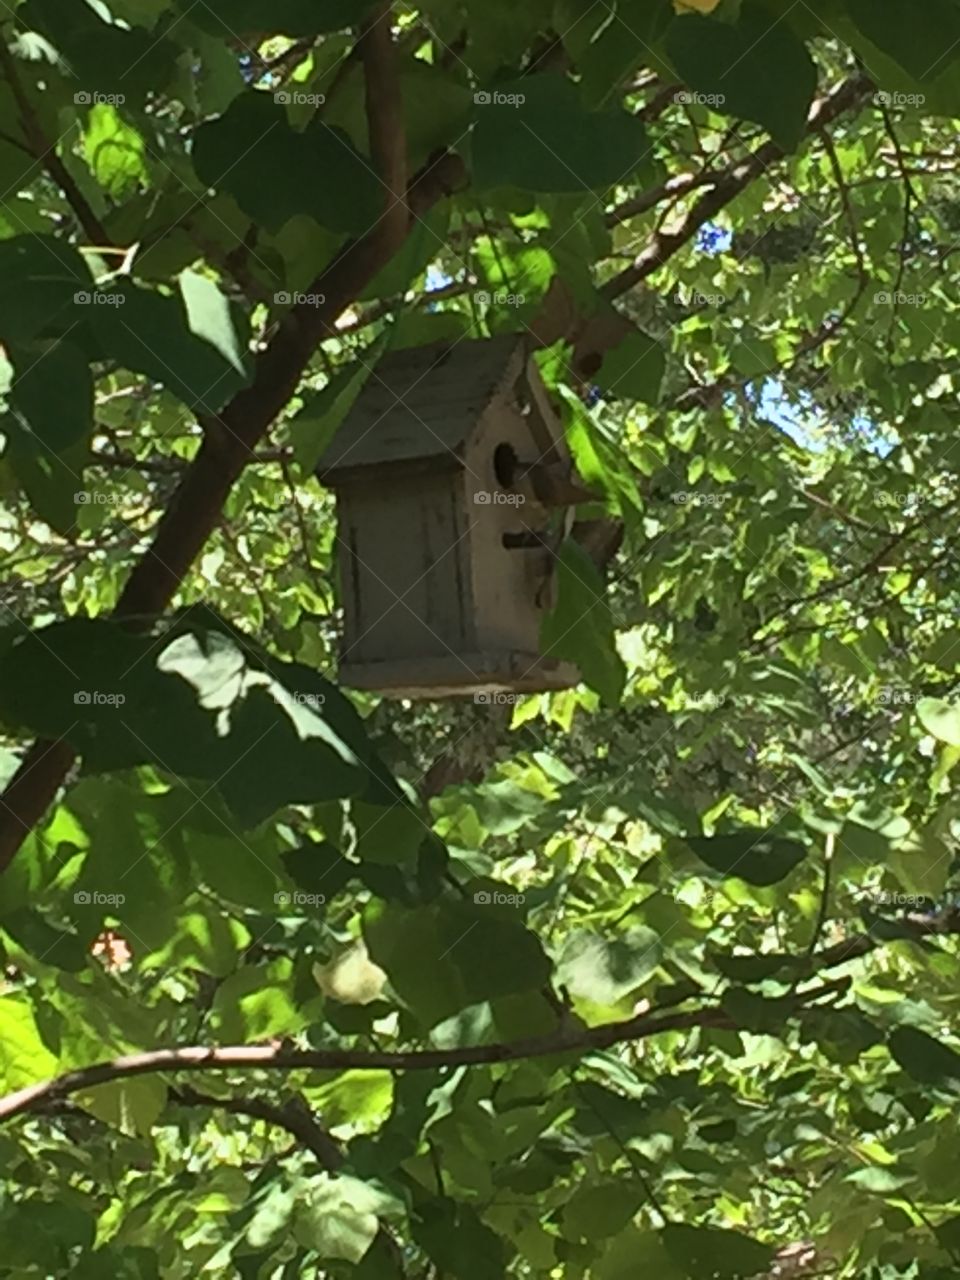 Birdhouse in the trees